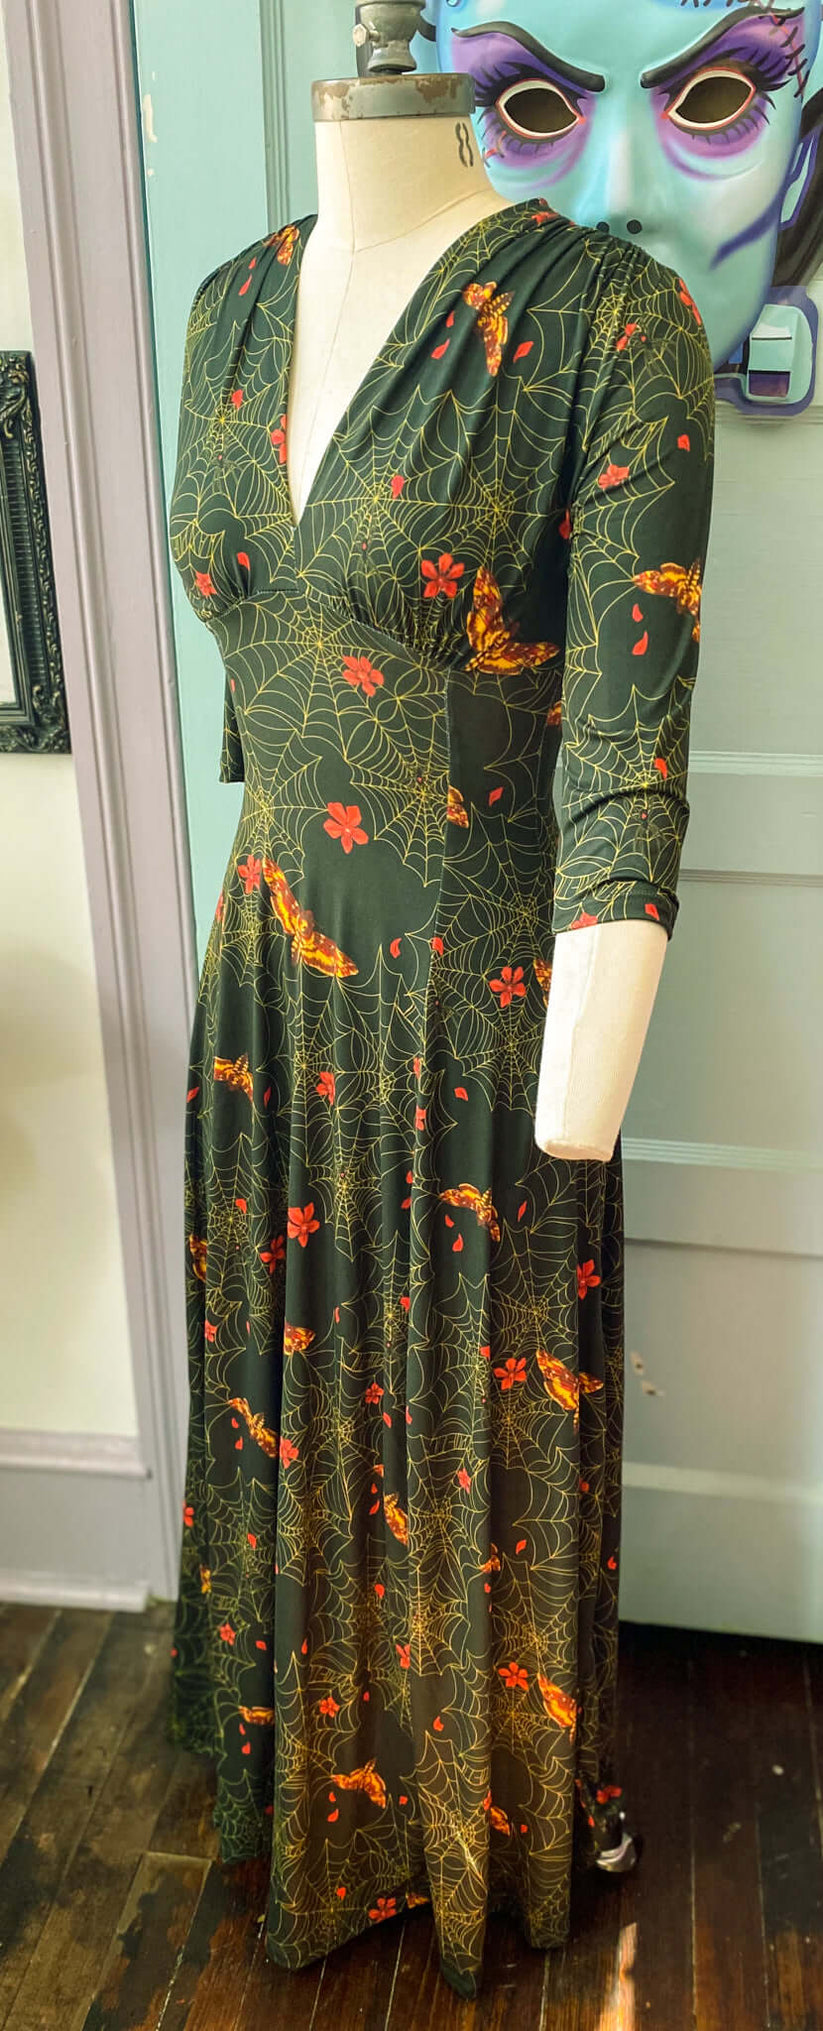 Raquel 3/4 Sleeve Maxi dress in Clarice Print – Wax Poetic Clothing